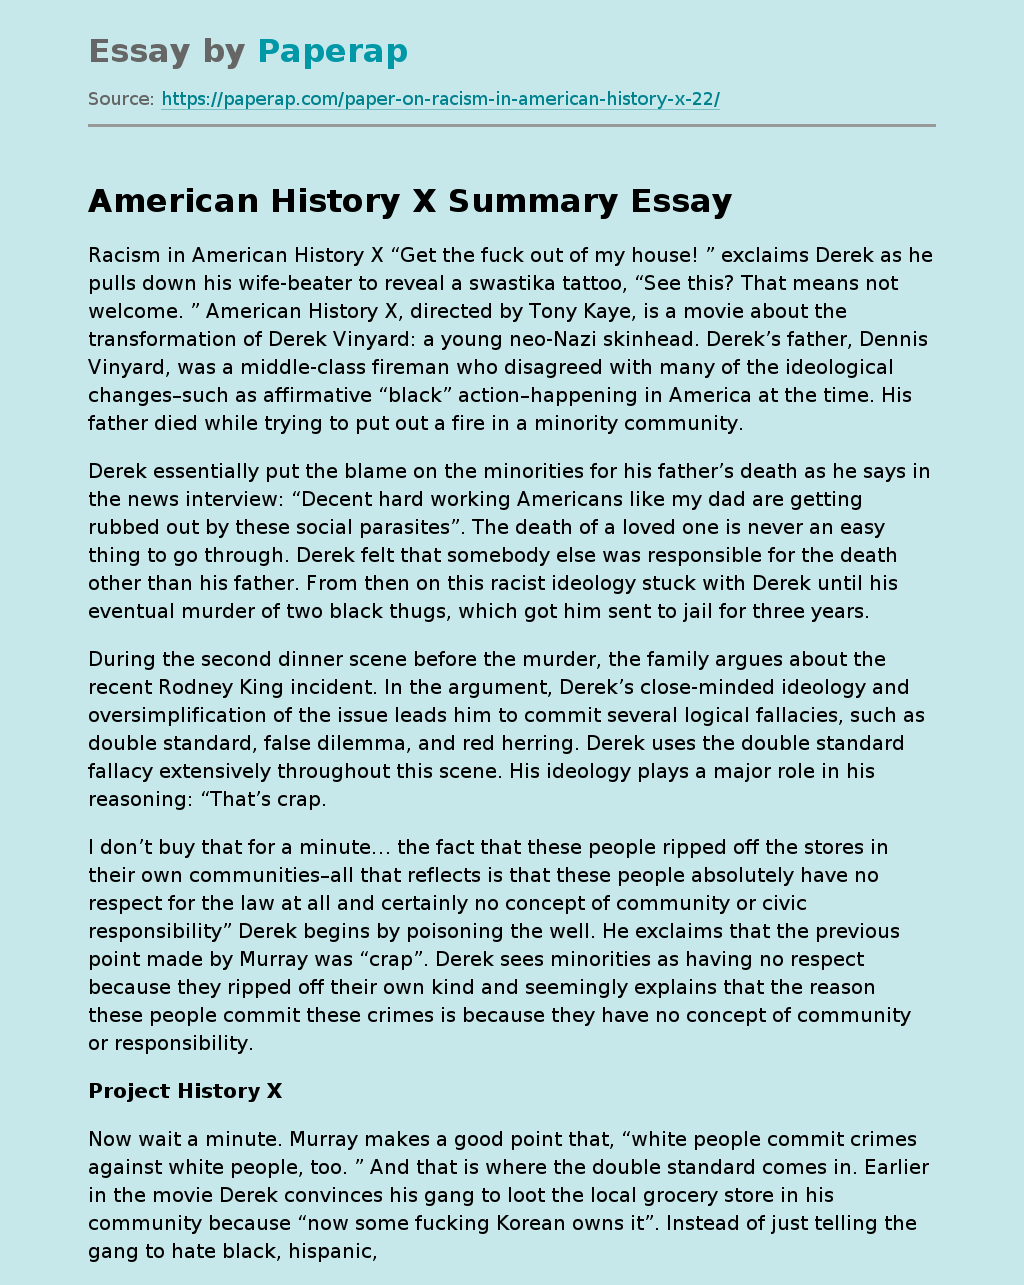 American History X Summary